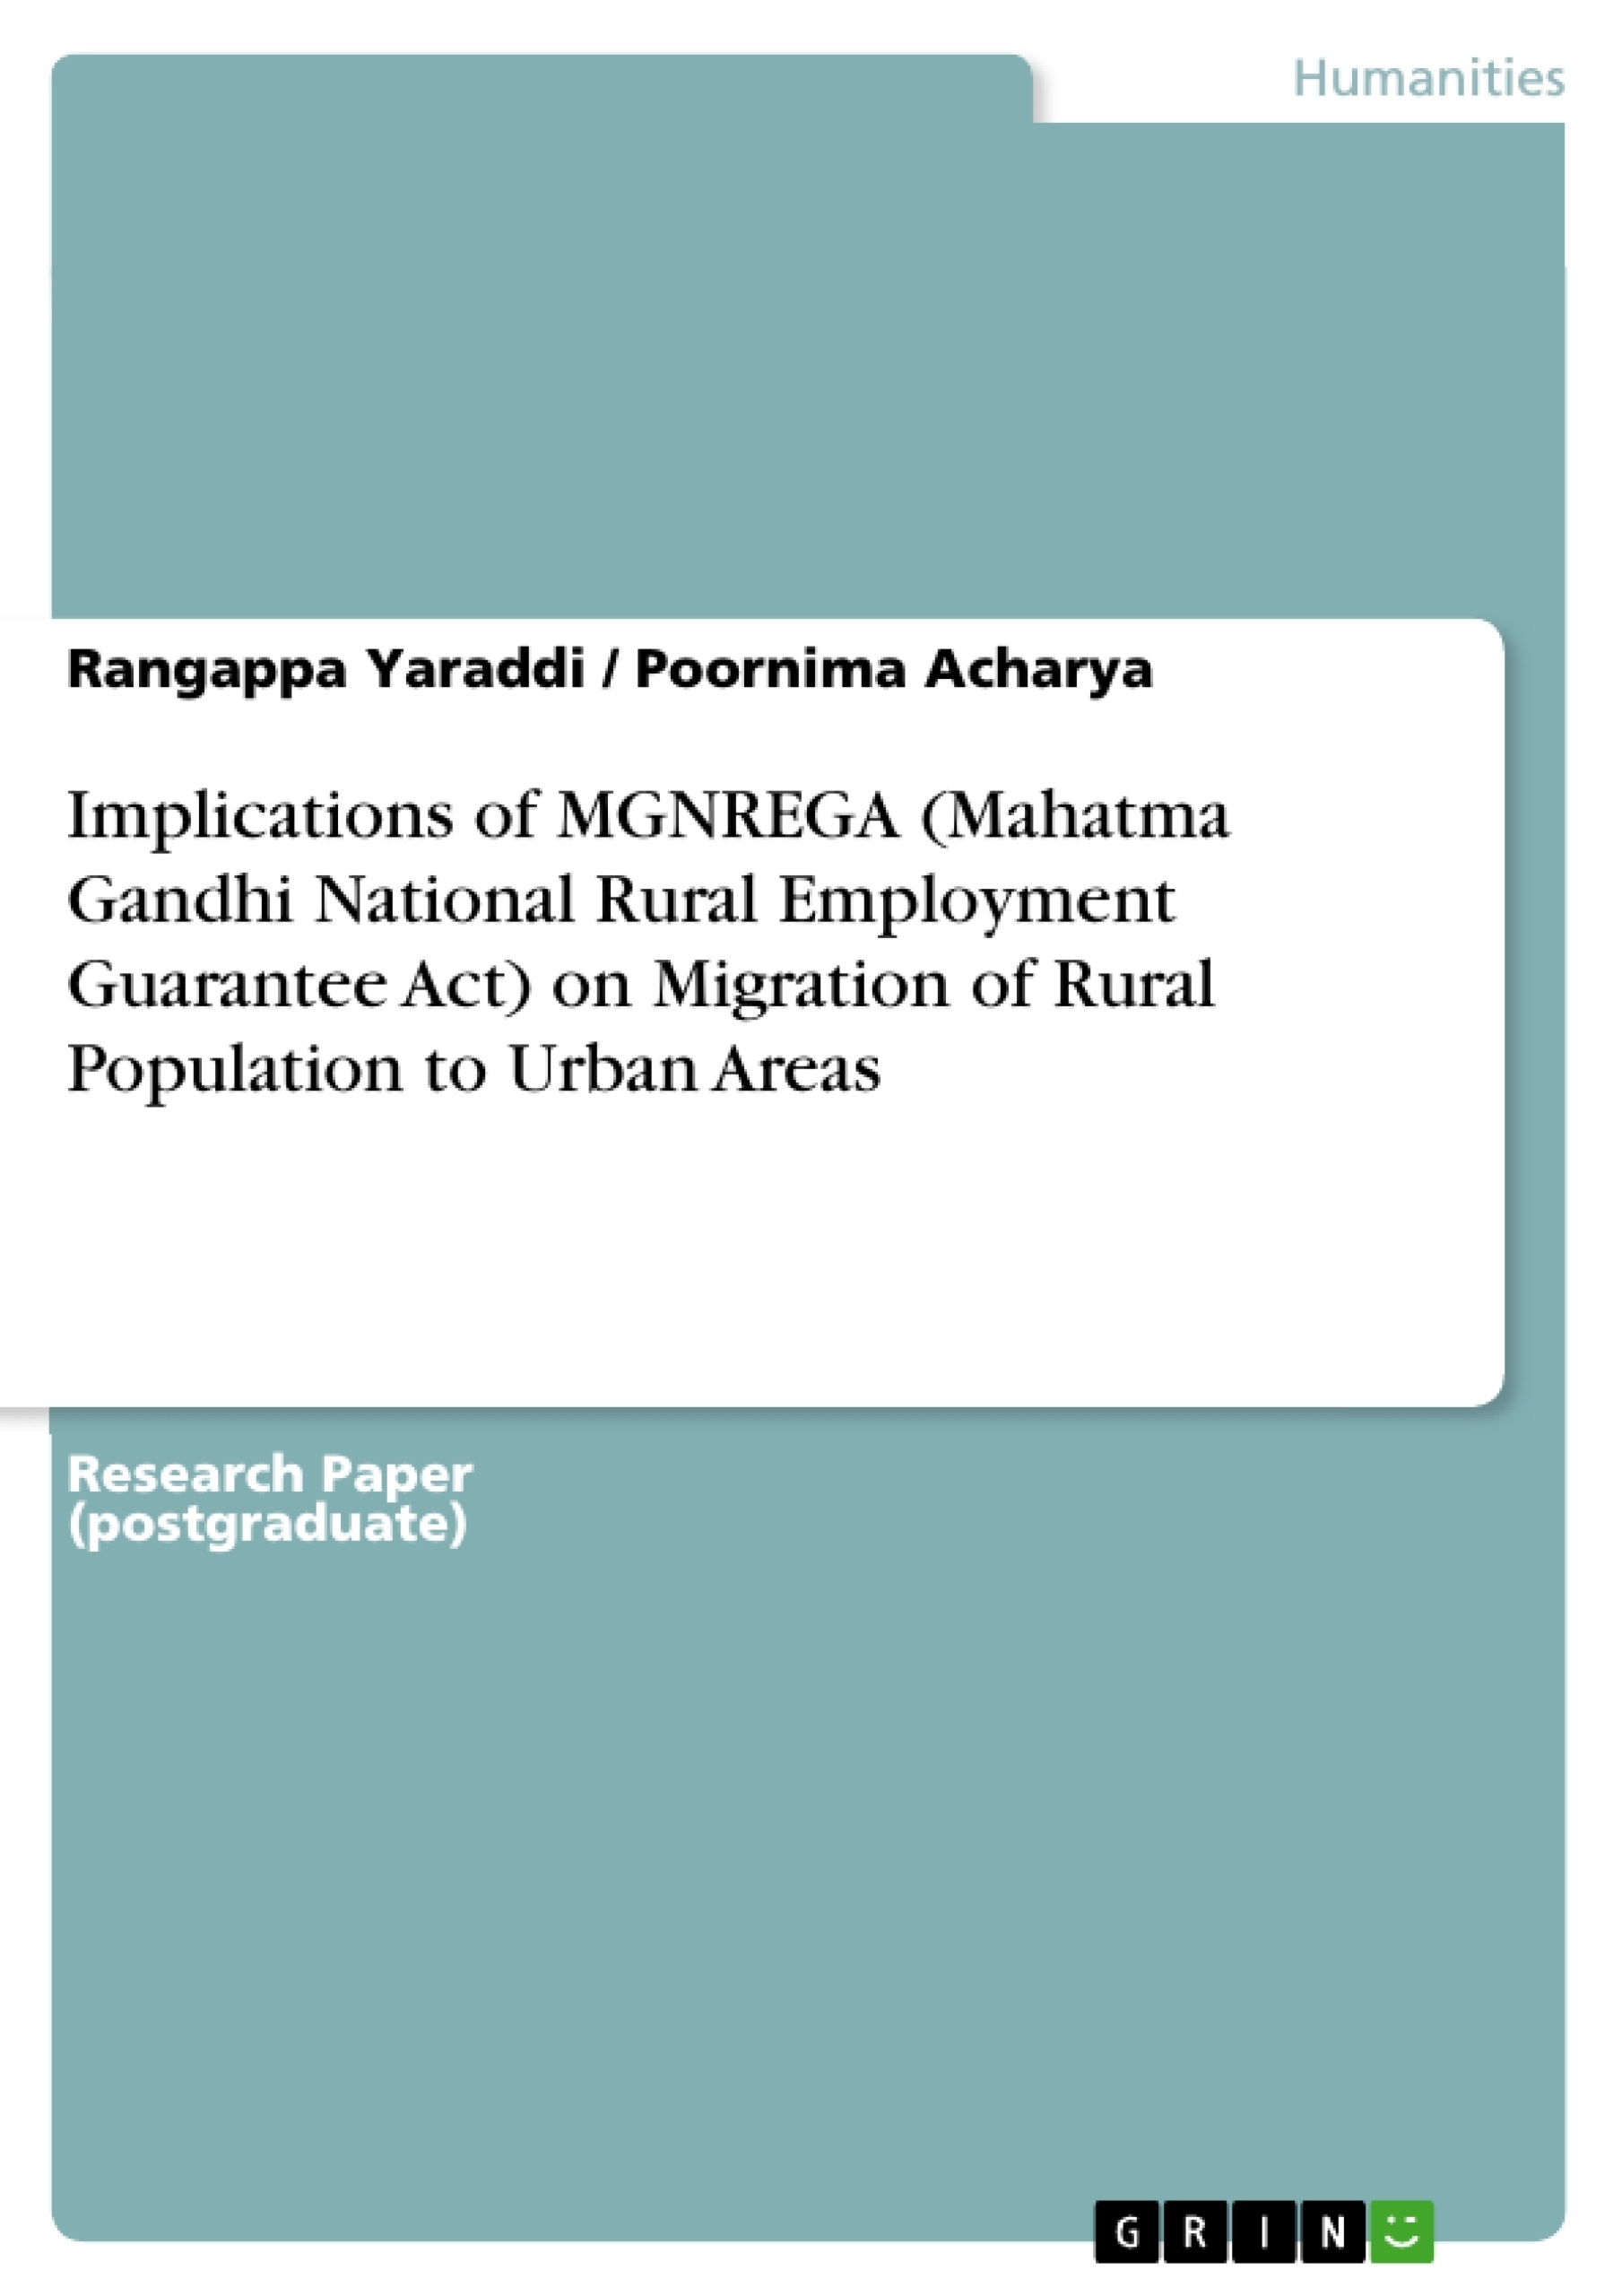 Titel: Implications of MGNREGA (Mahatma Gandhi National Rural Employment Guarantee Act) on Migration of Rural Population to Urban Areas